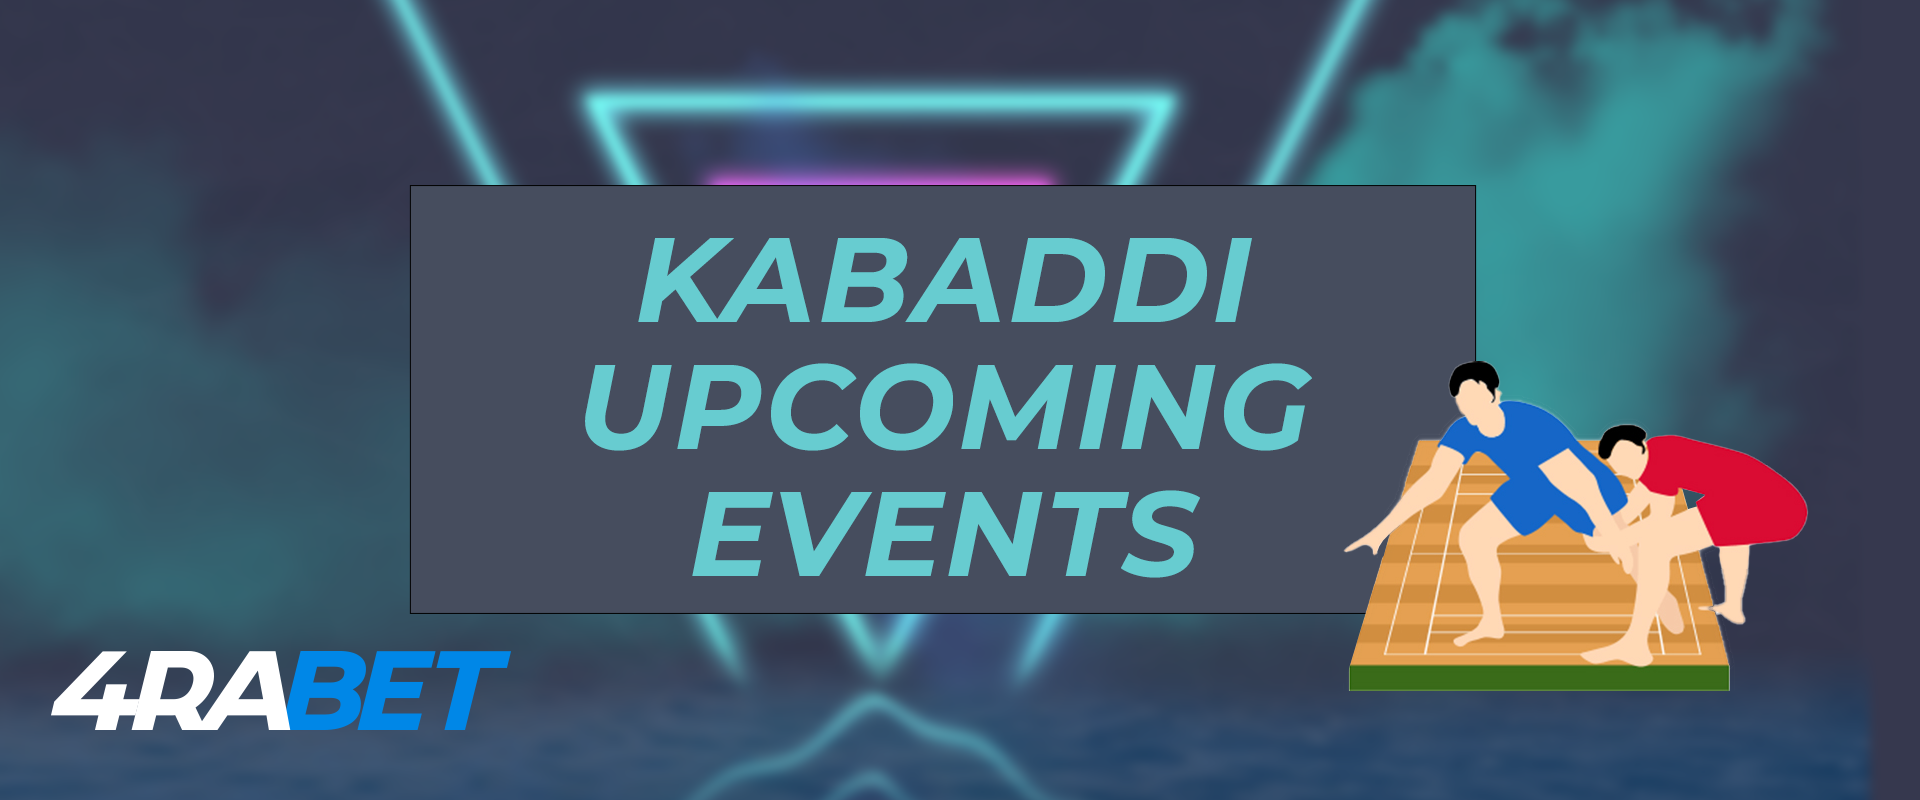 All major kabaddi events on the 4rabet.